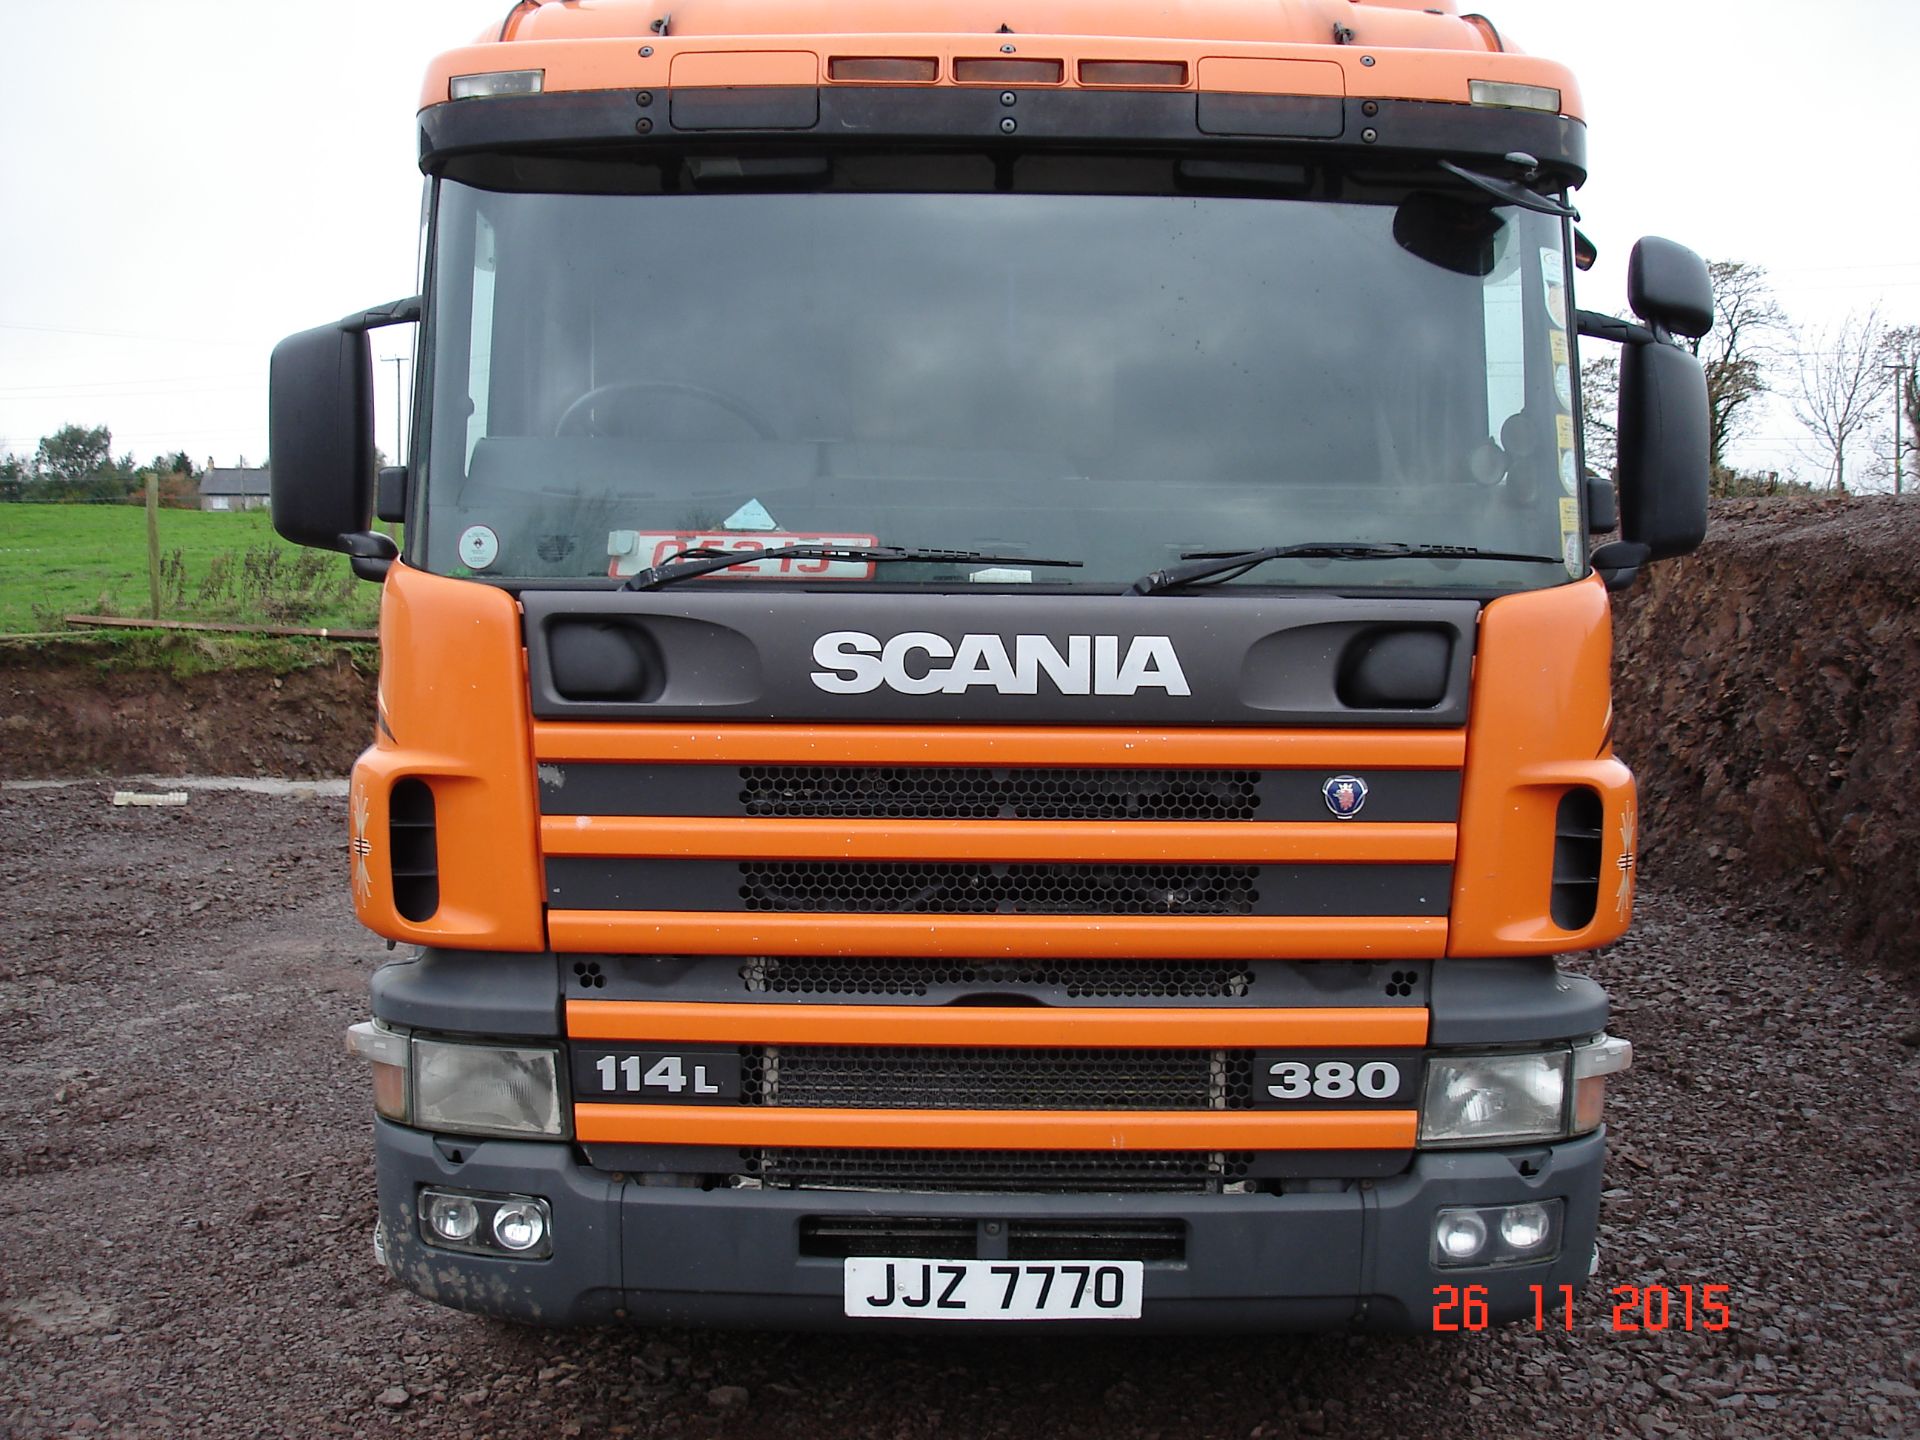 2005 Scania 114L (380) 6 x 2 sleeper cab c/w Houghton doubledeck livestock body & Doubledeck trailer - Image 2 of 10